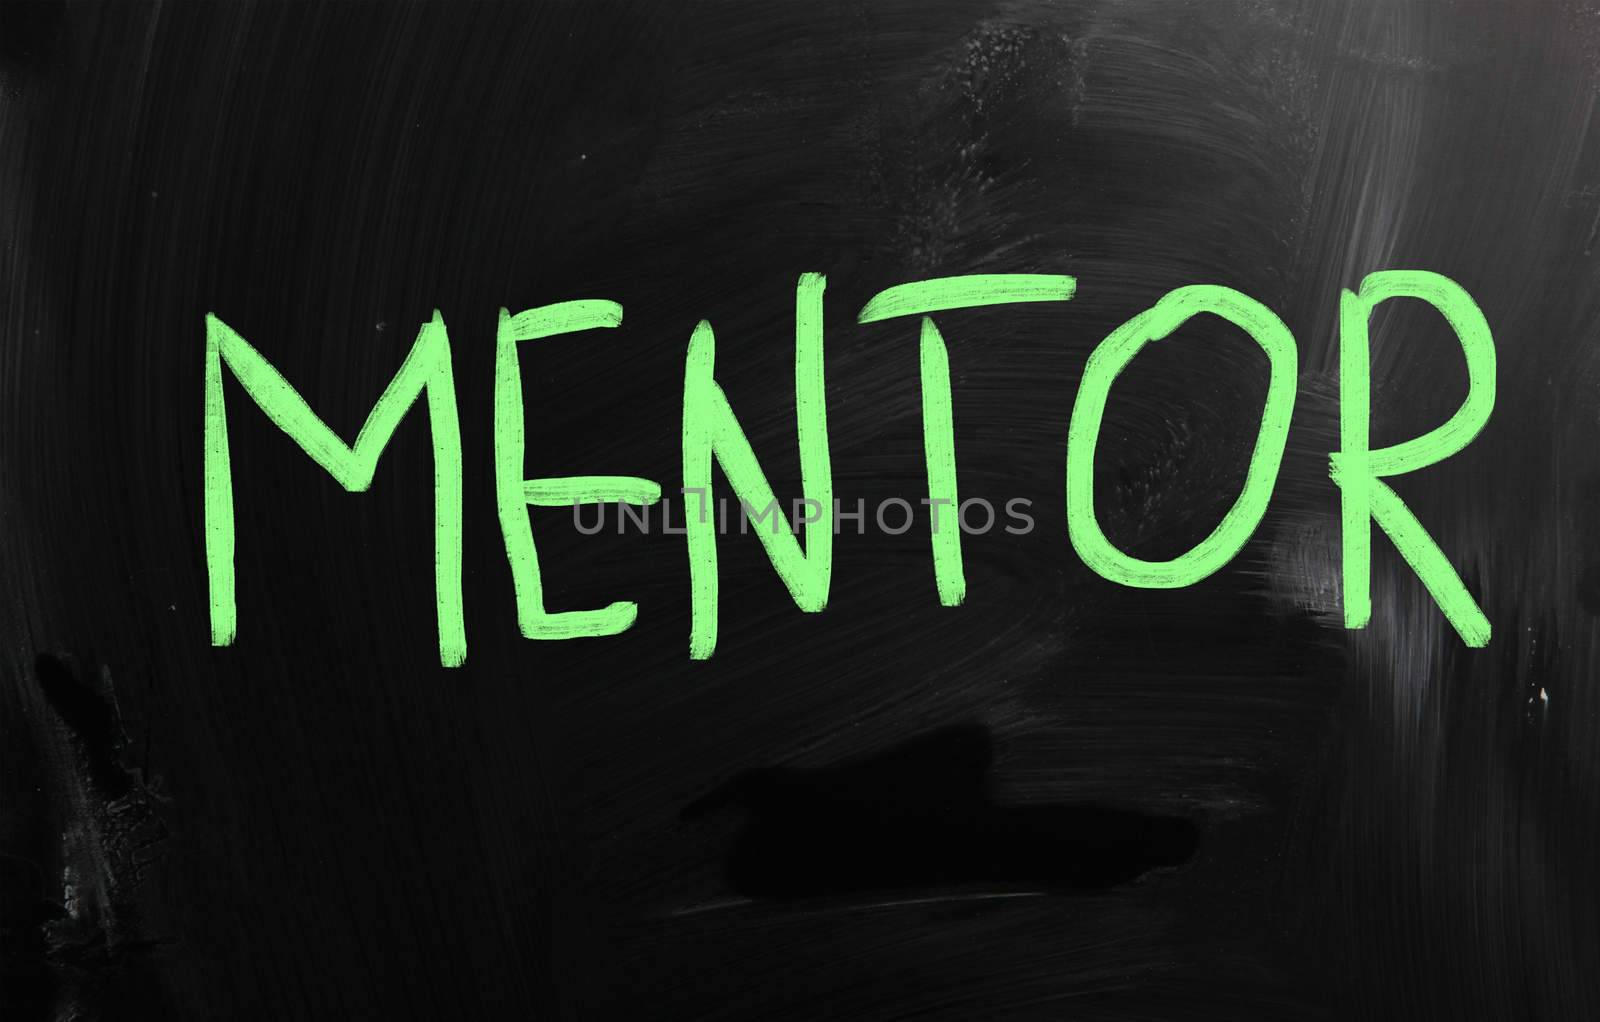 "Mentor" handwritten with white chalk on a blackboard